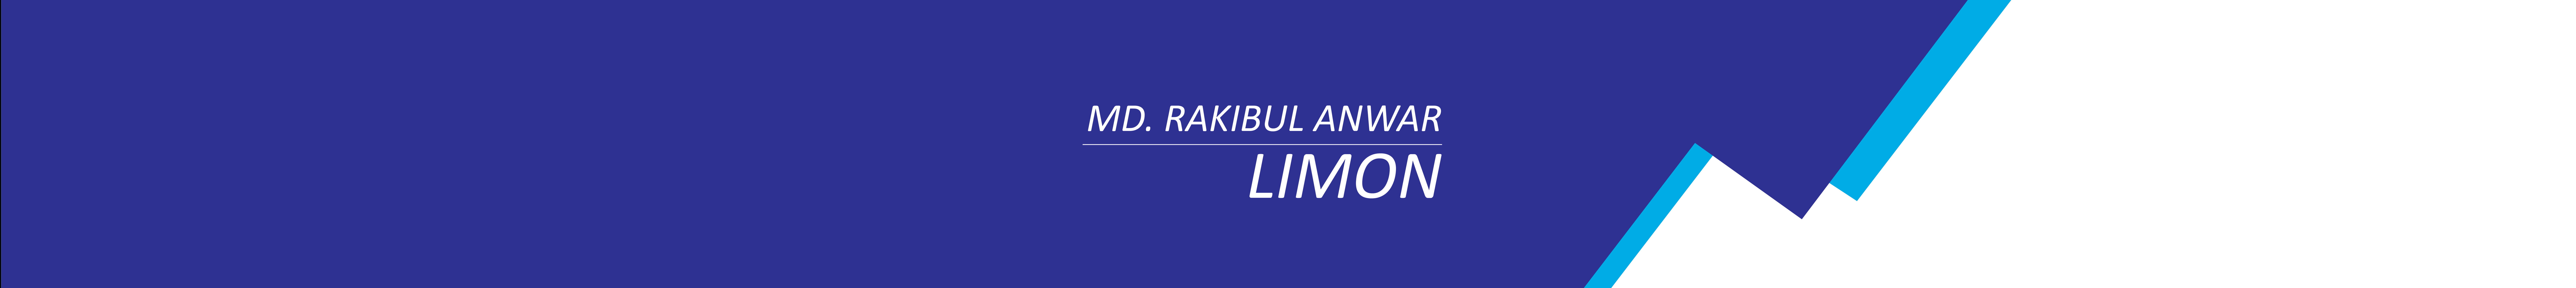 Md Rakibul Anwar (Limon)'s profile banner